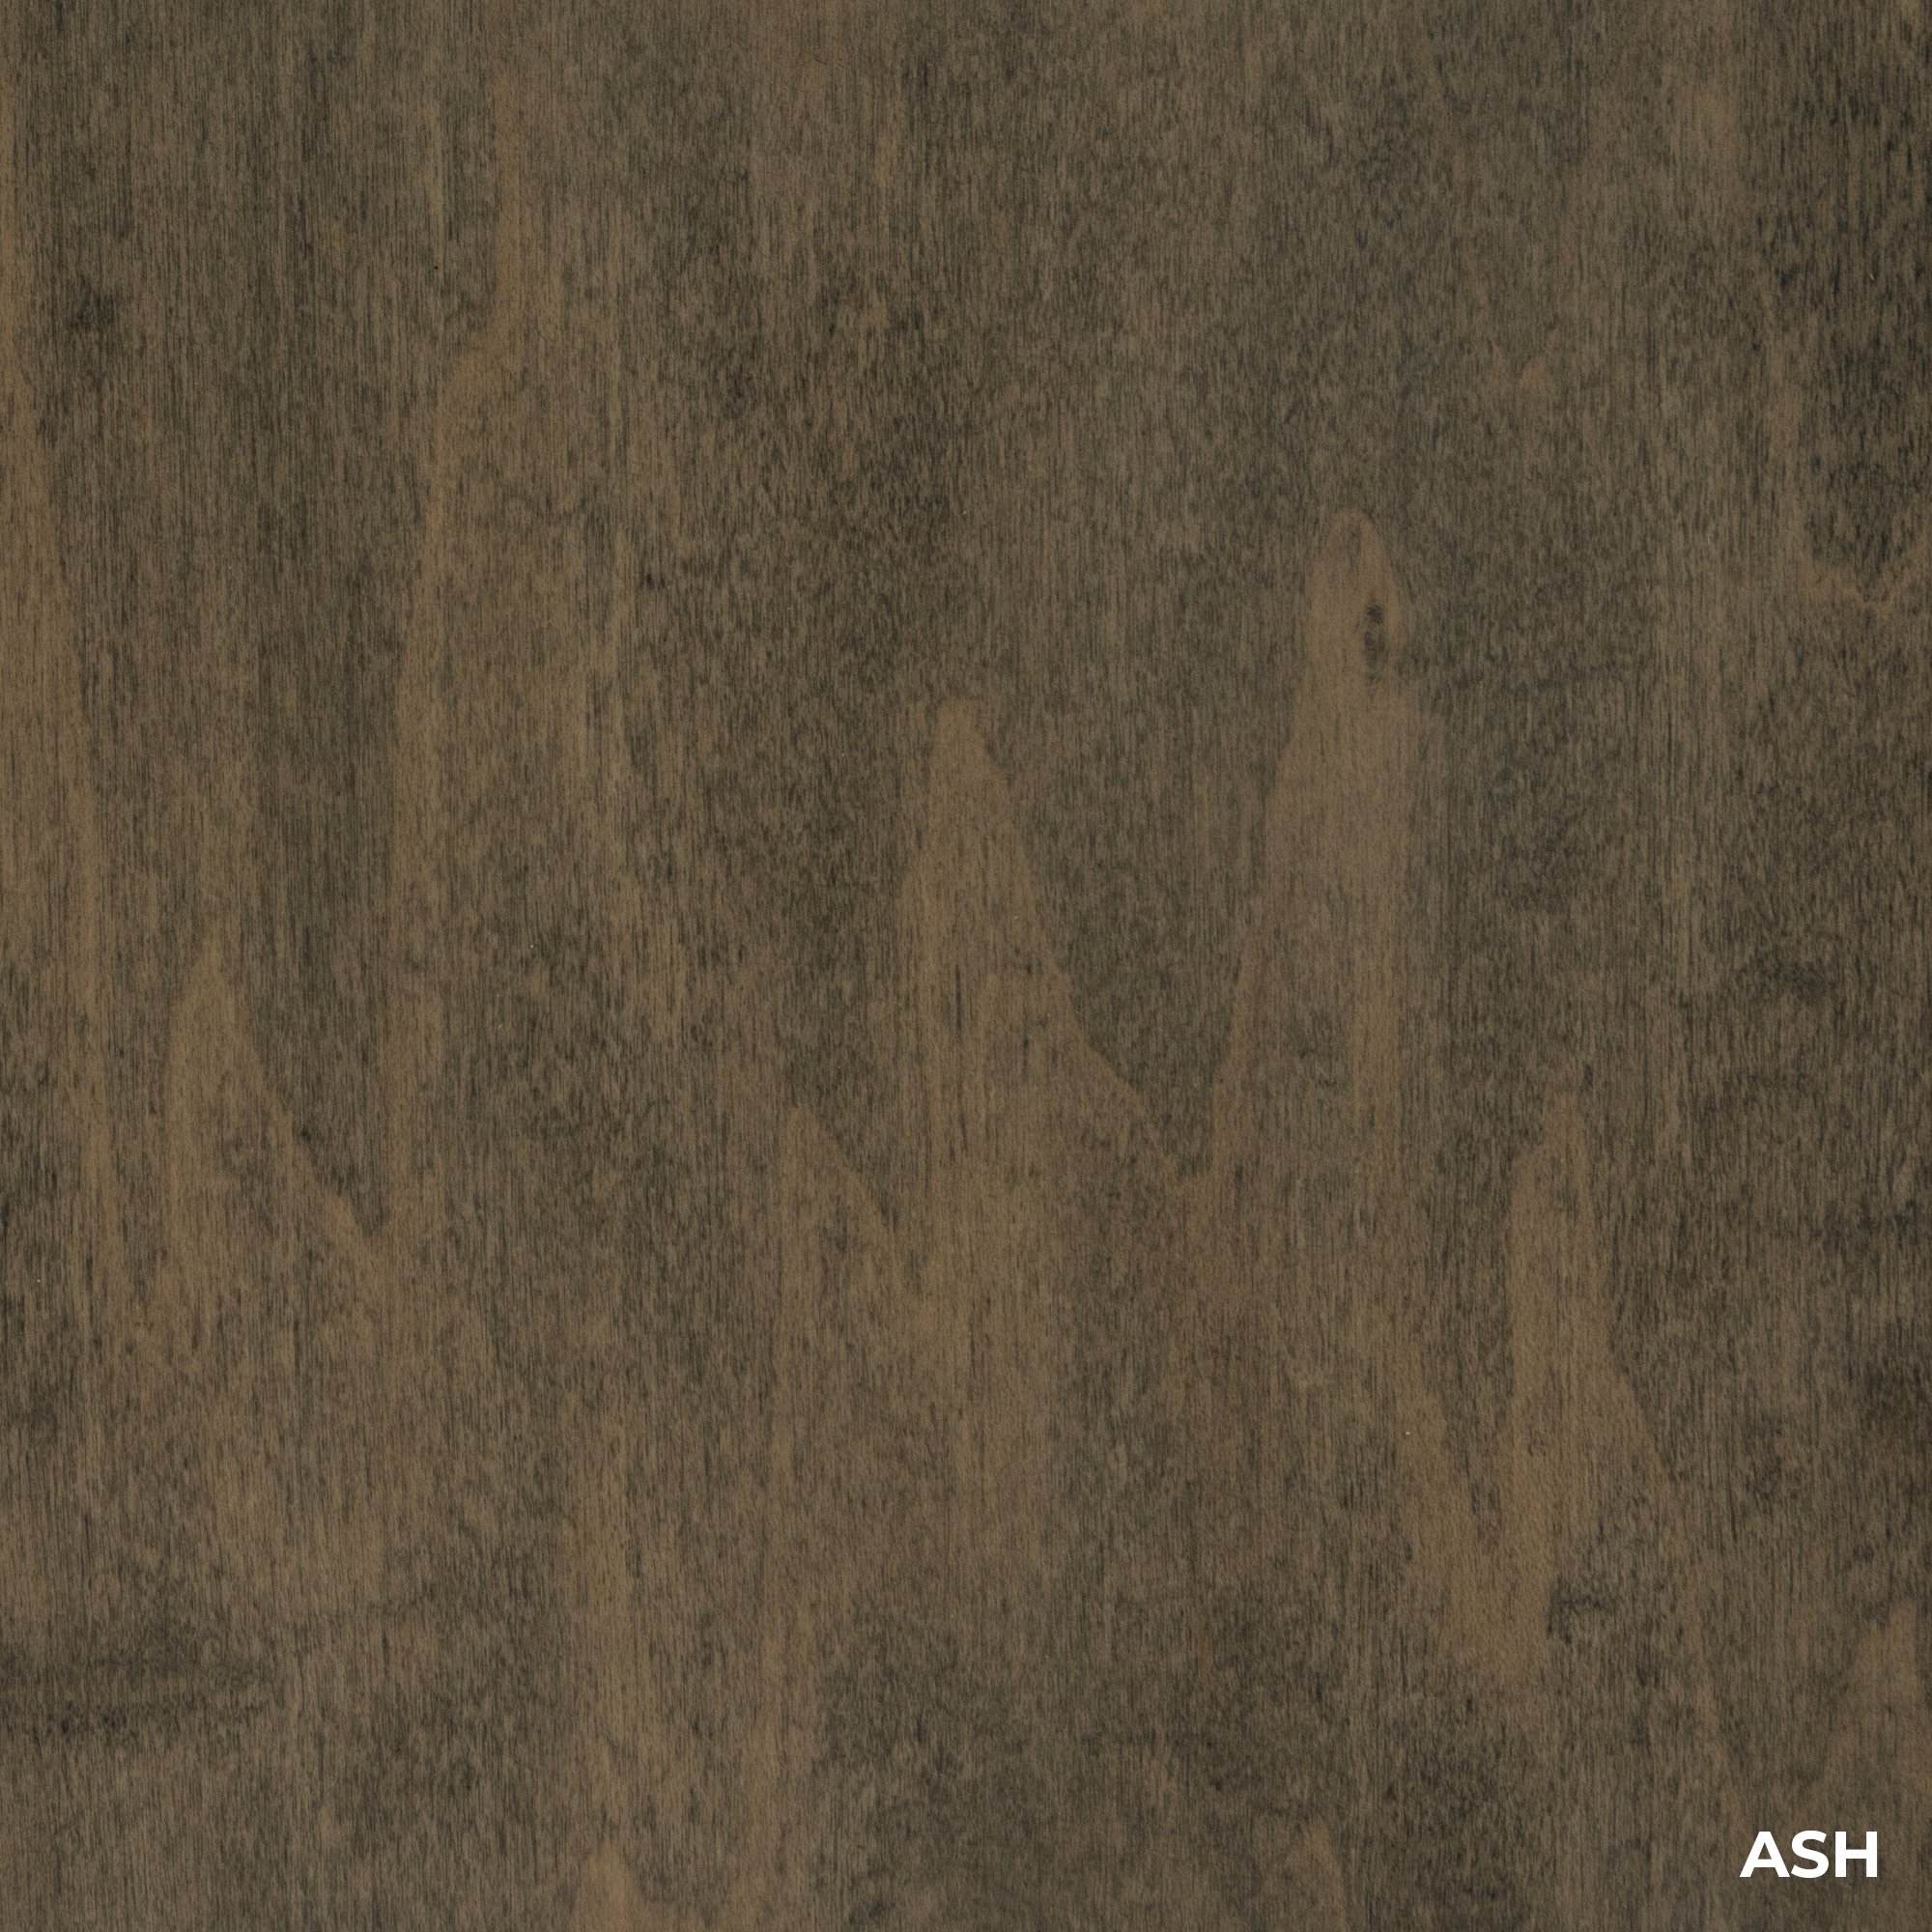 Authentic-Wood-Ash.jpg